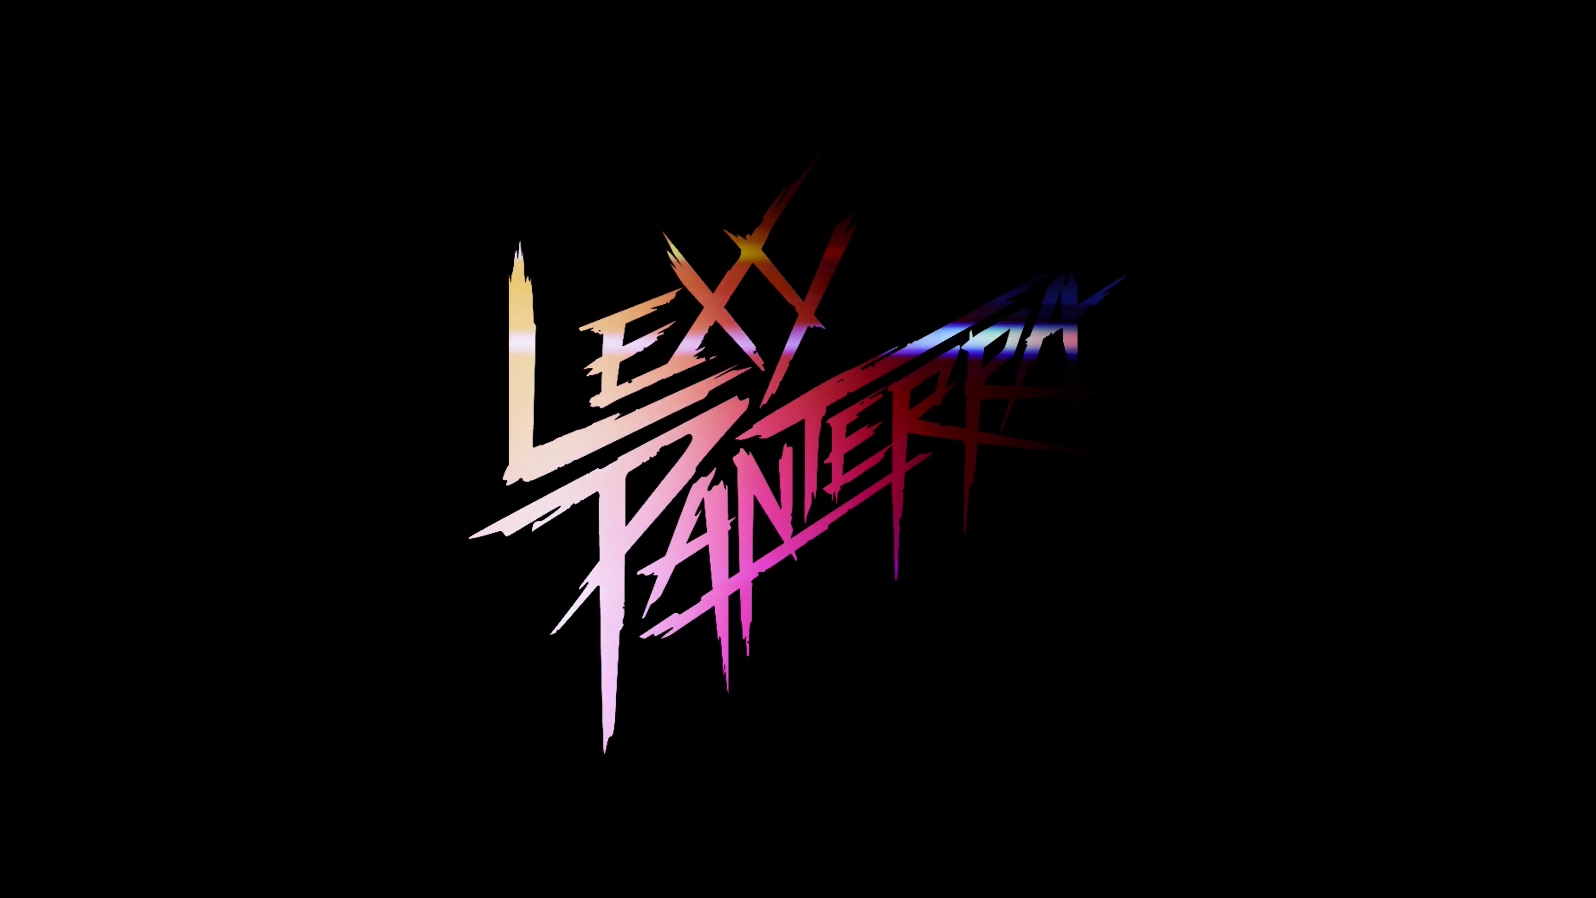 Lexy Panterra - Used to Know (Twerk Freest<x>yle) - 4K - 1080P